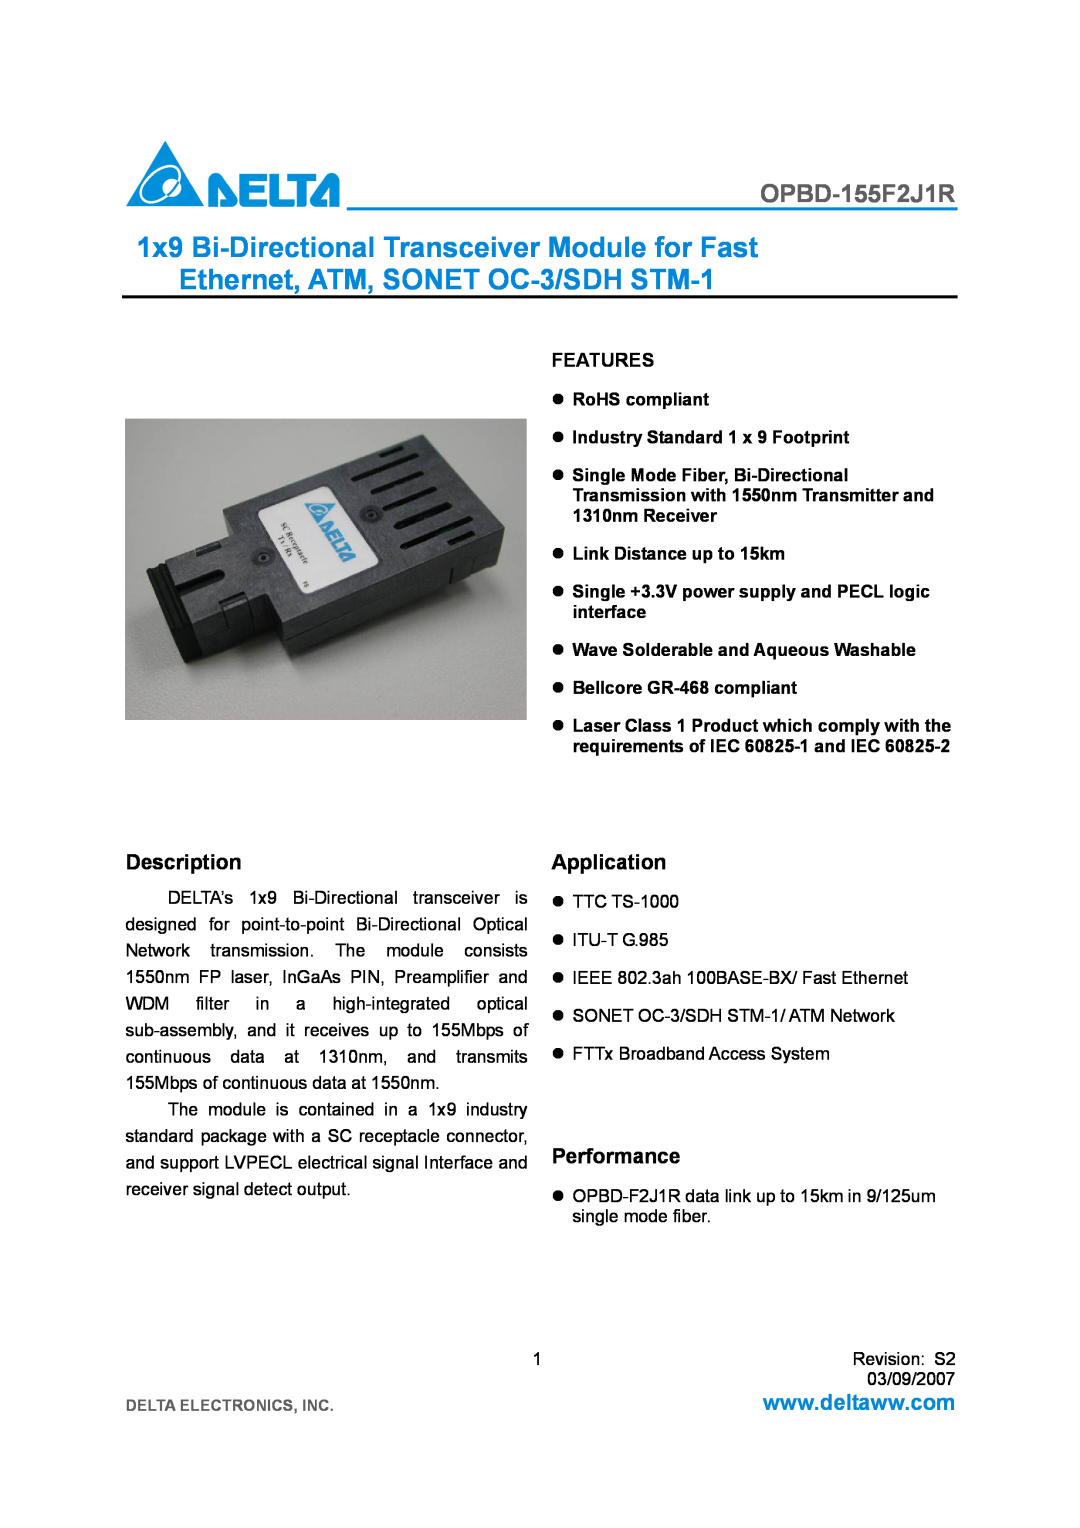 Delta Electronics OPBD-155F2J1R manual Description, Application, Performance, Link Distance up to 15km, Features 